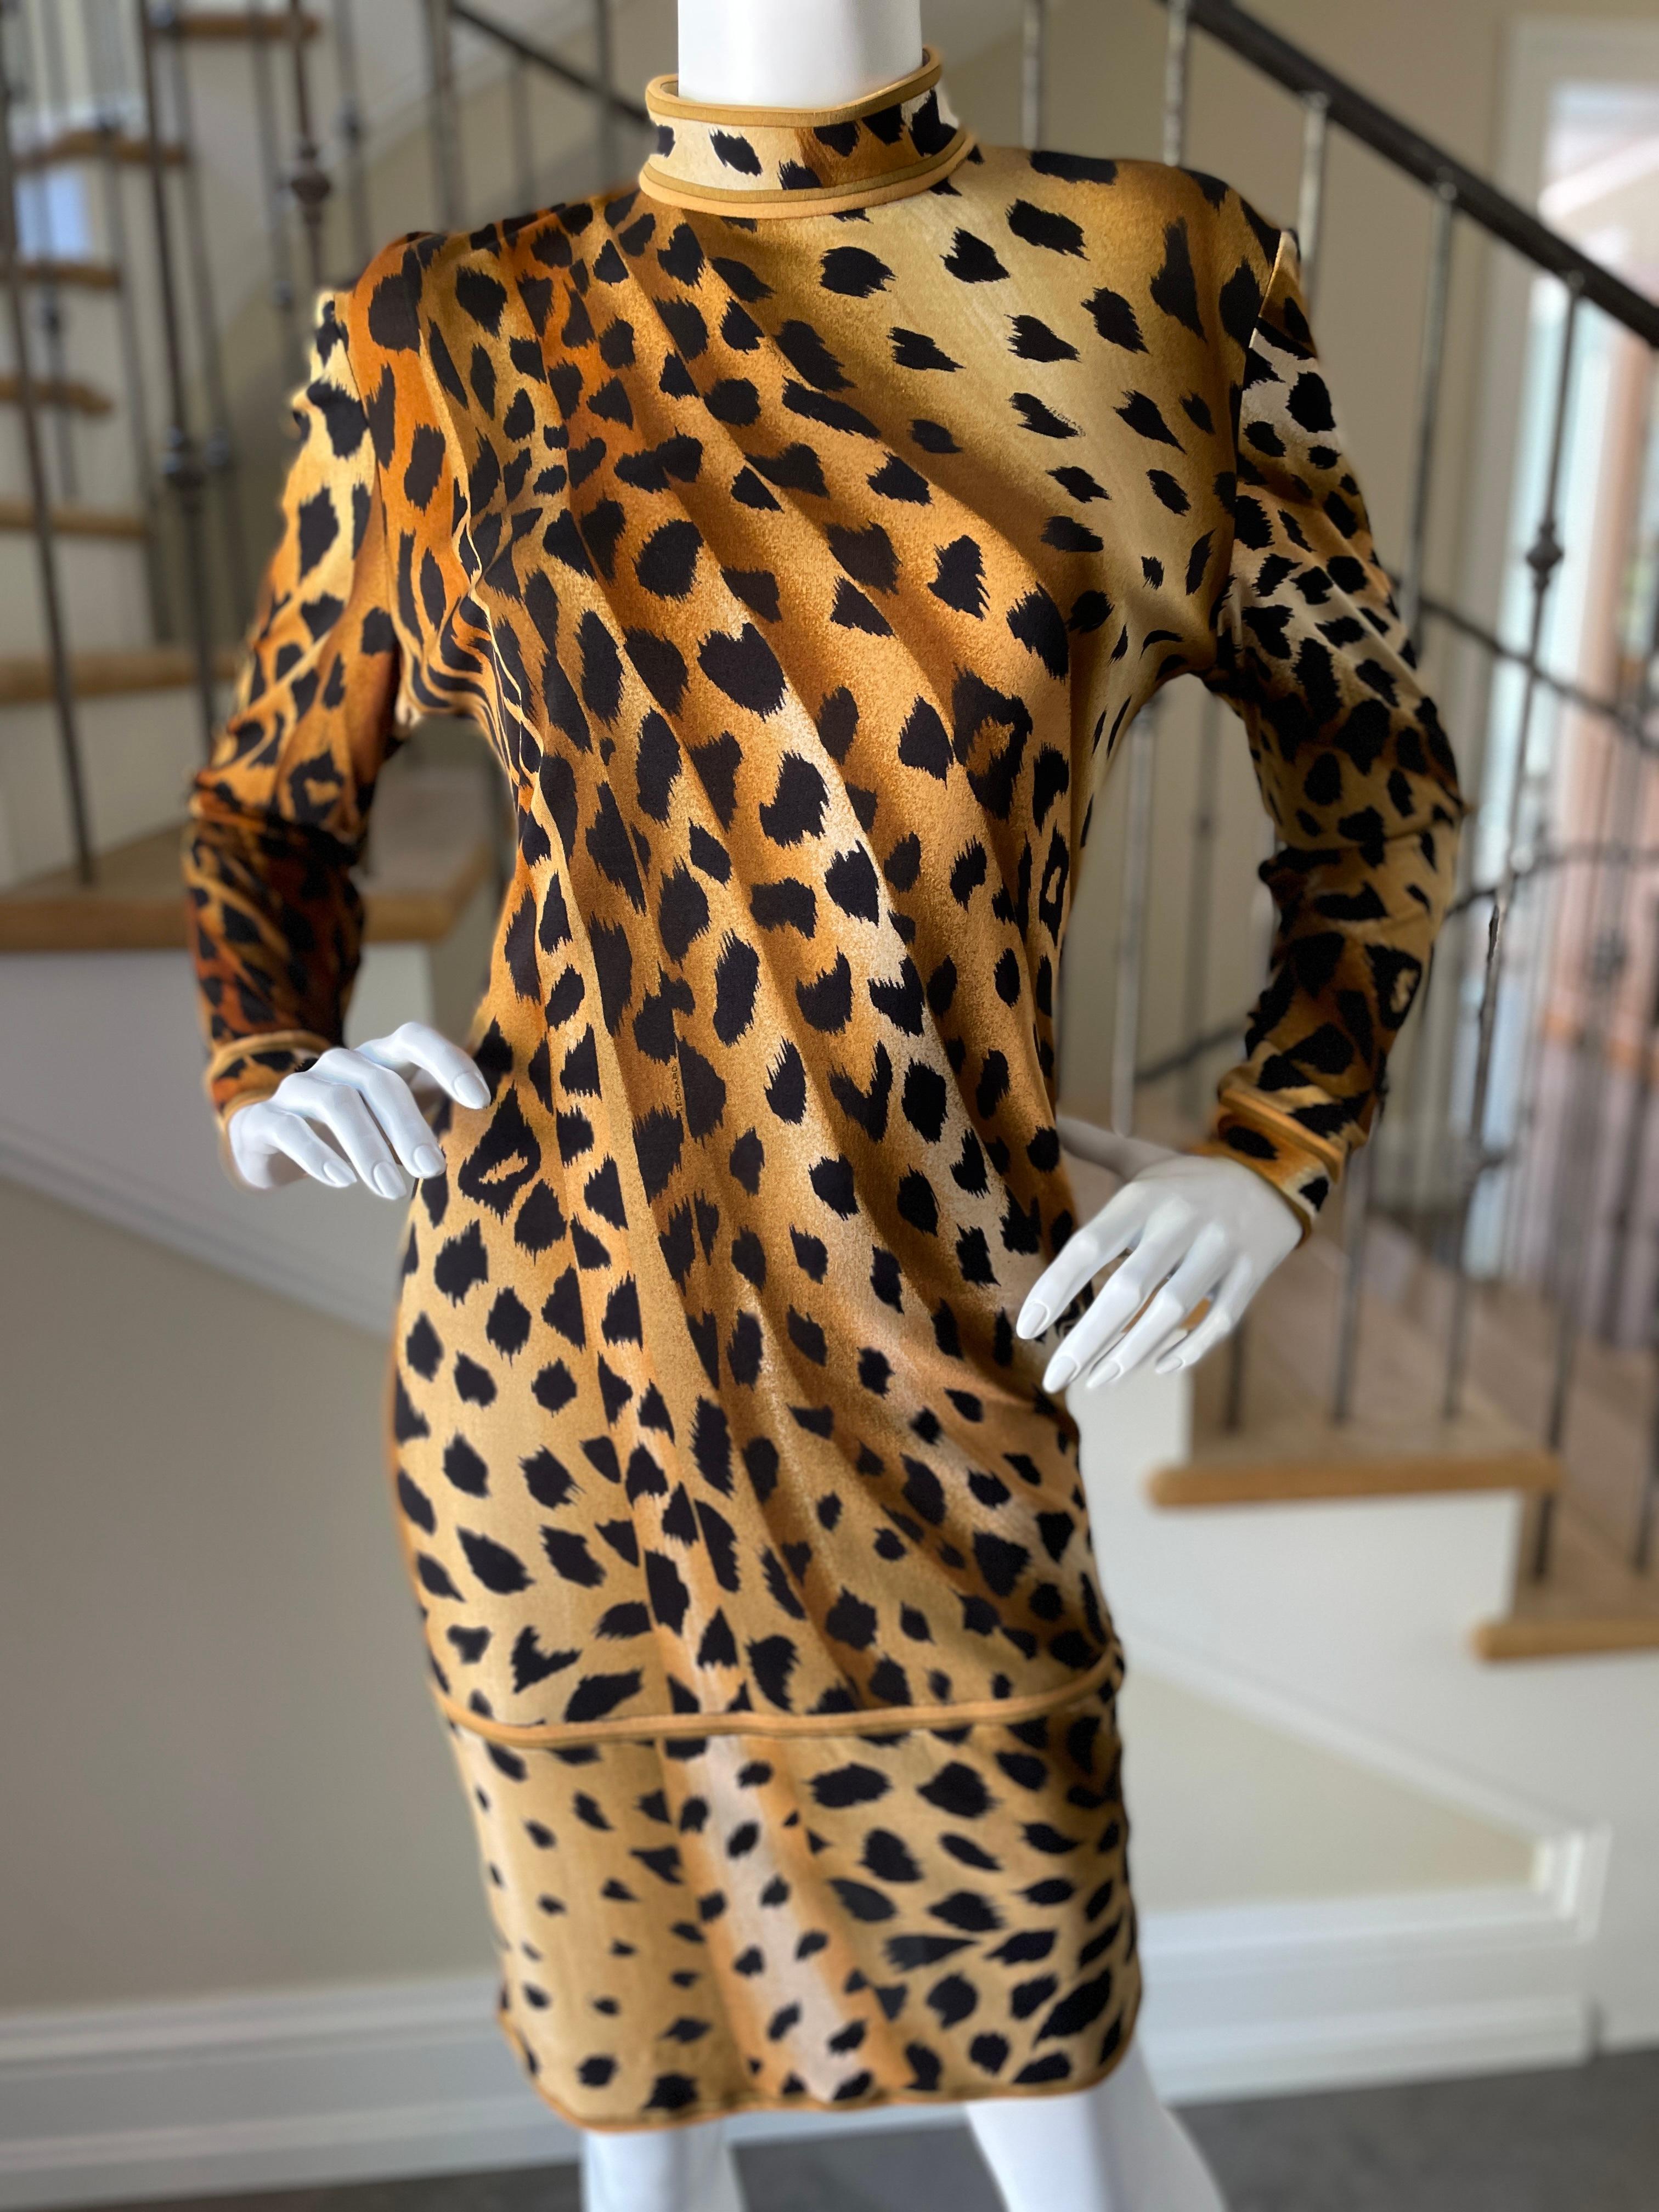 Leonard Paris 1970's Leopard Print Silk Jersey Dress In Excellent Condition For Sale In Cloverdale, CA